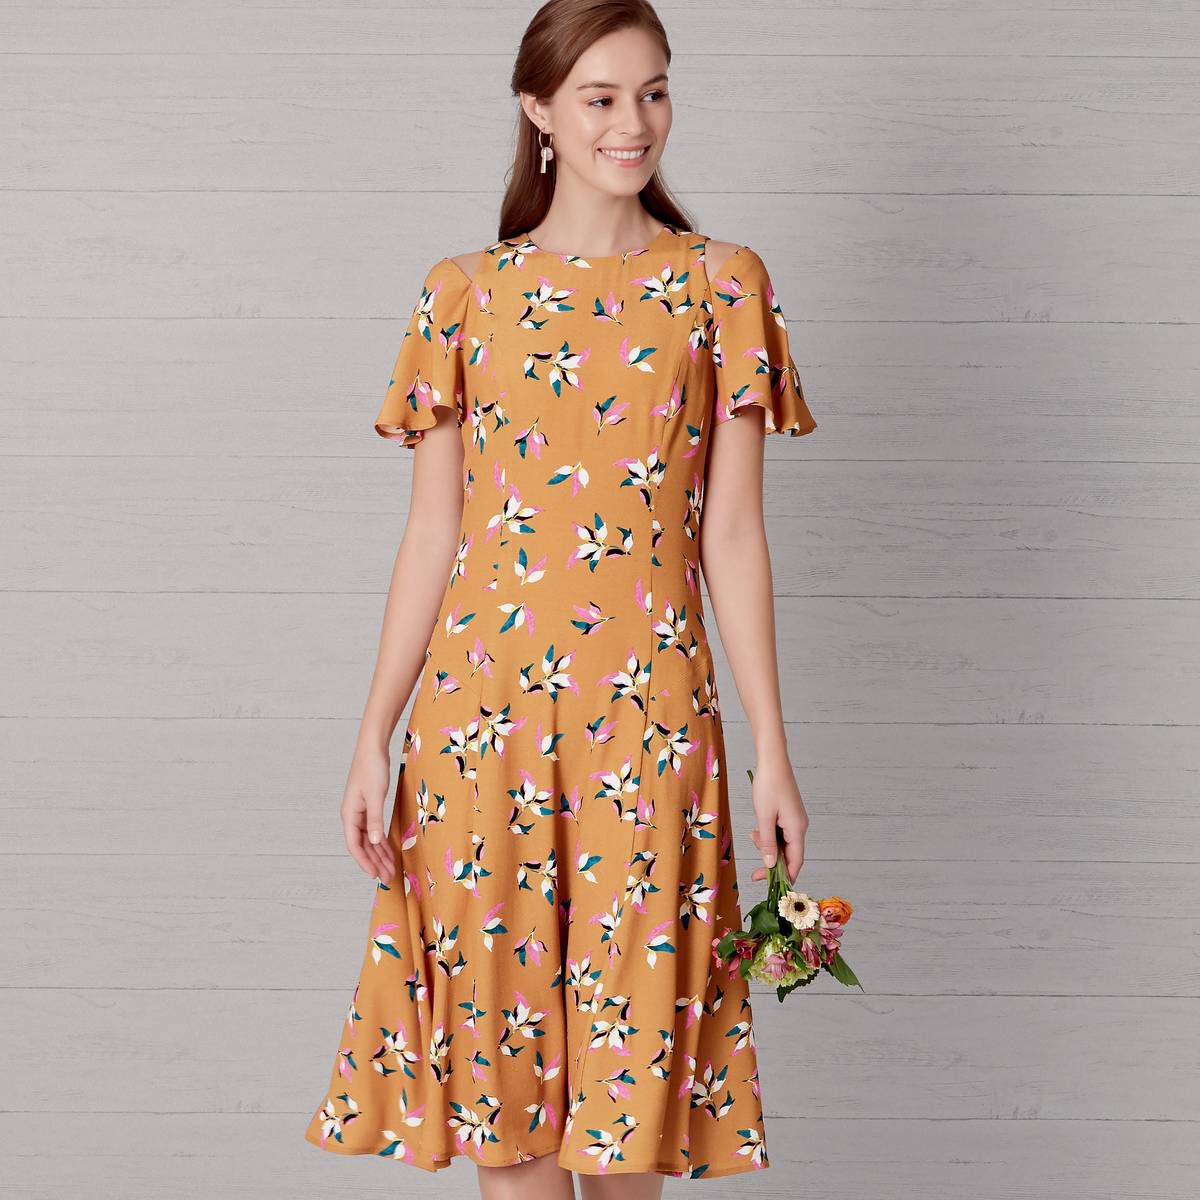 New Look Women's Dress Sewing Pattern N6652 | Hobbycraft